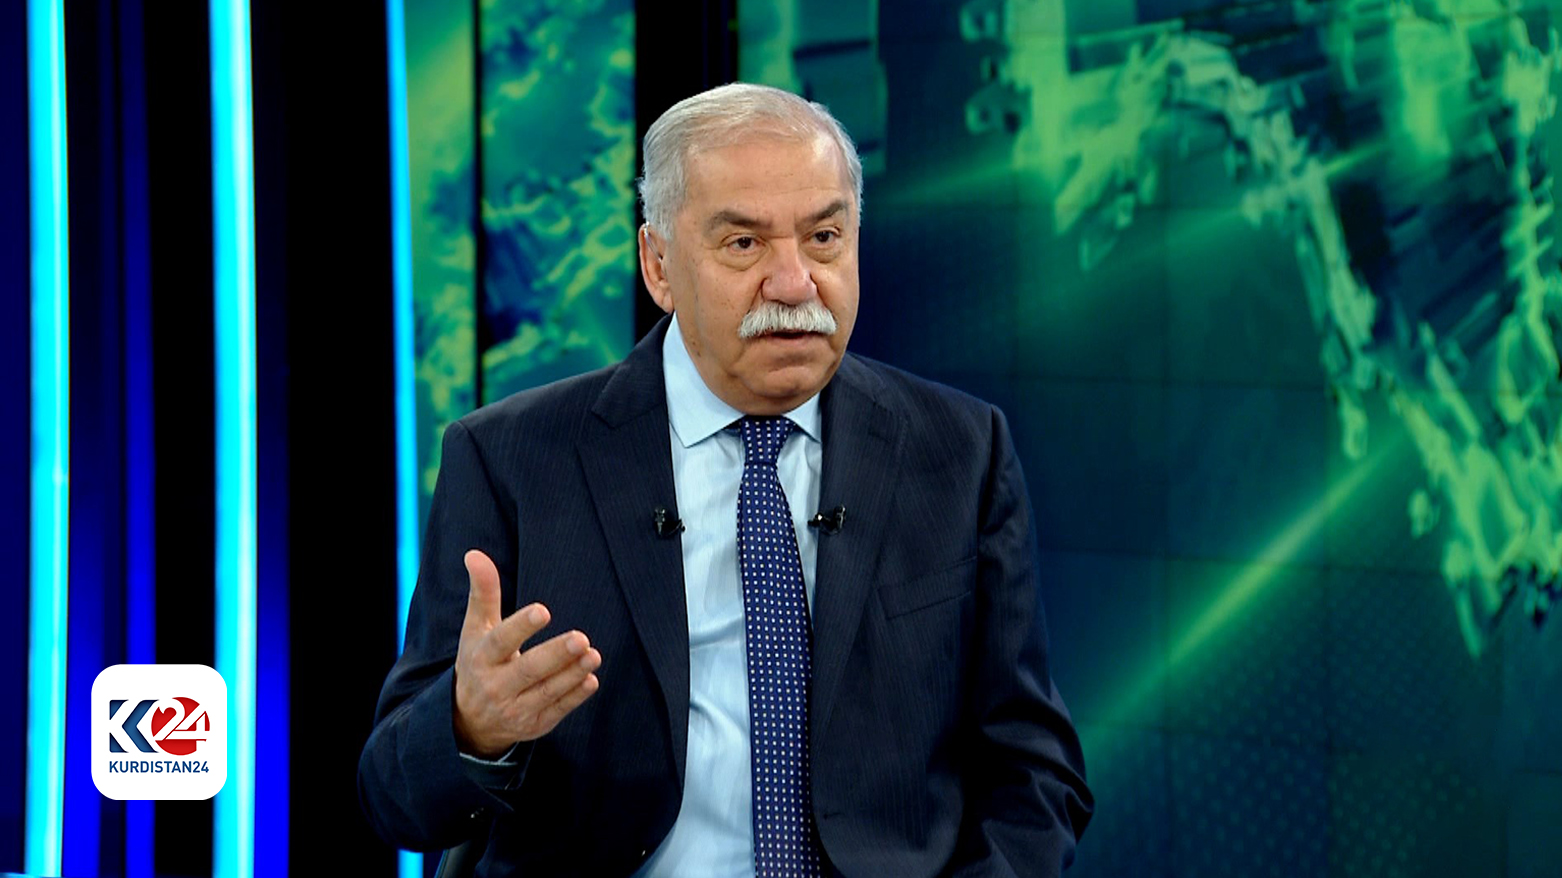 On Friday, Sunni politician Mithal al-Alusi participated in an interview with Kurdistan24. (Photo: Kurdistan 24)